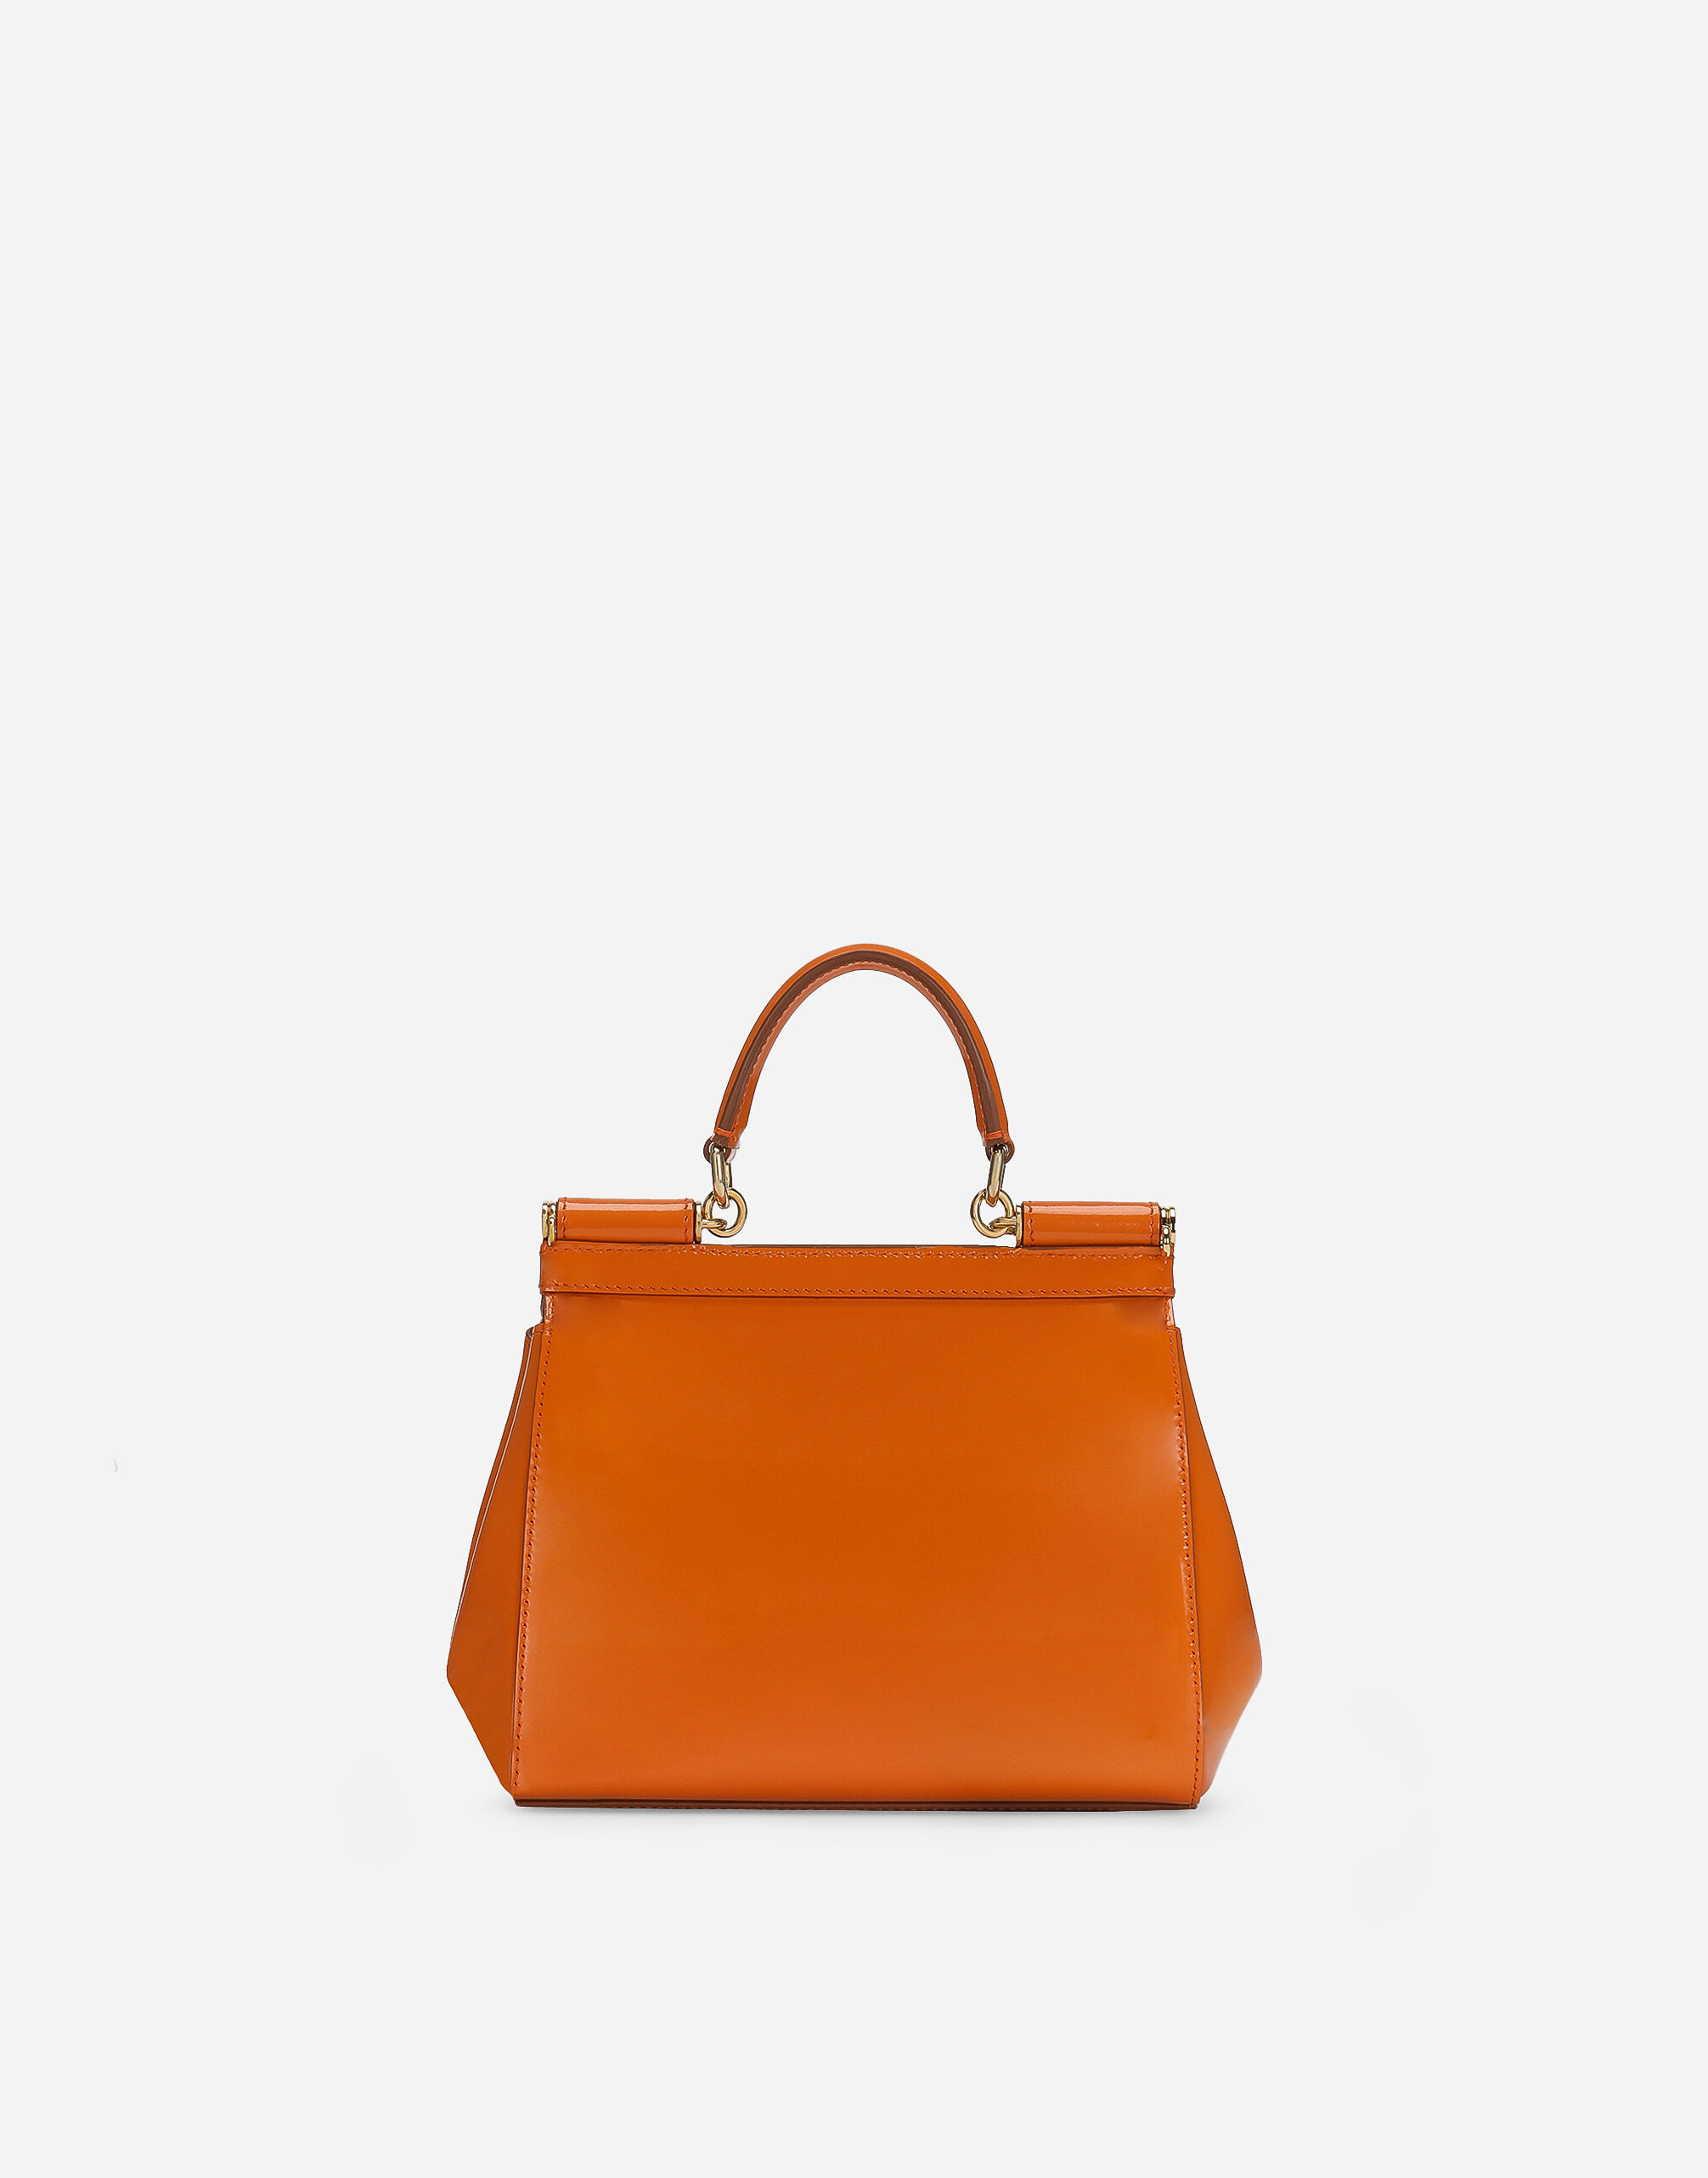 Medium Sicily handbag in Orange for | Dolce&Gabbana® US